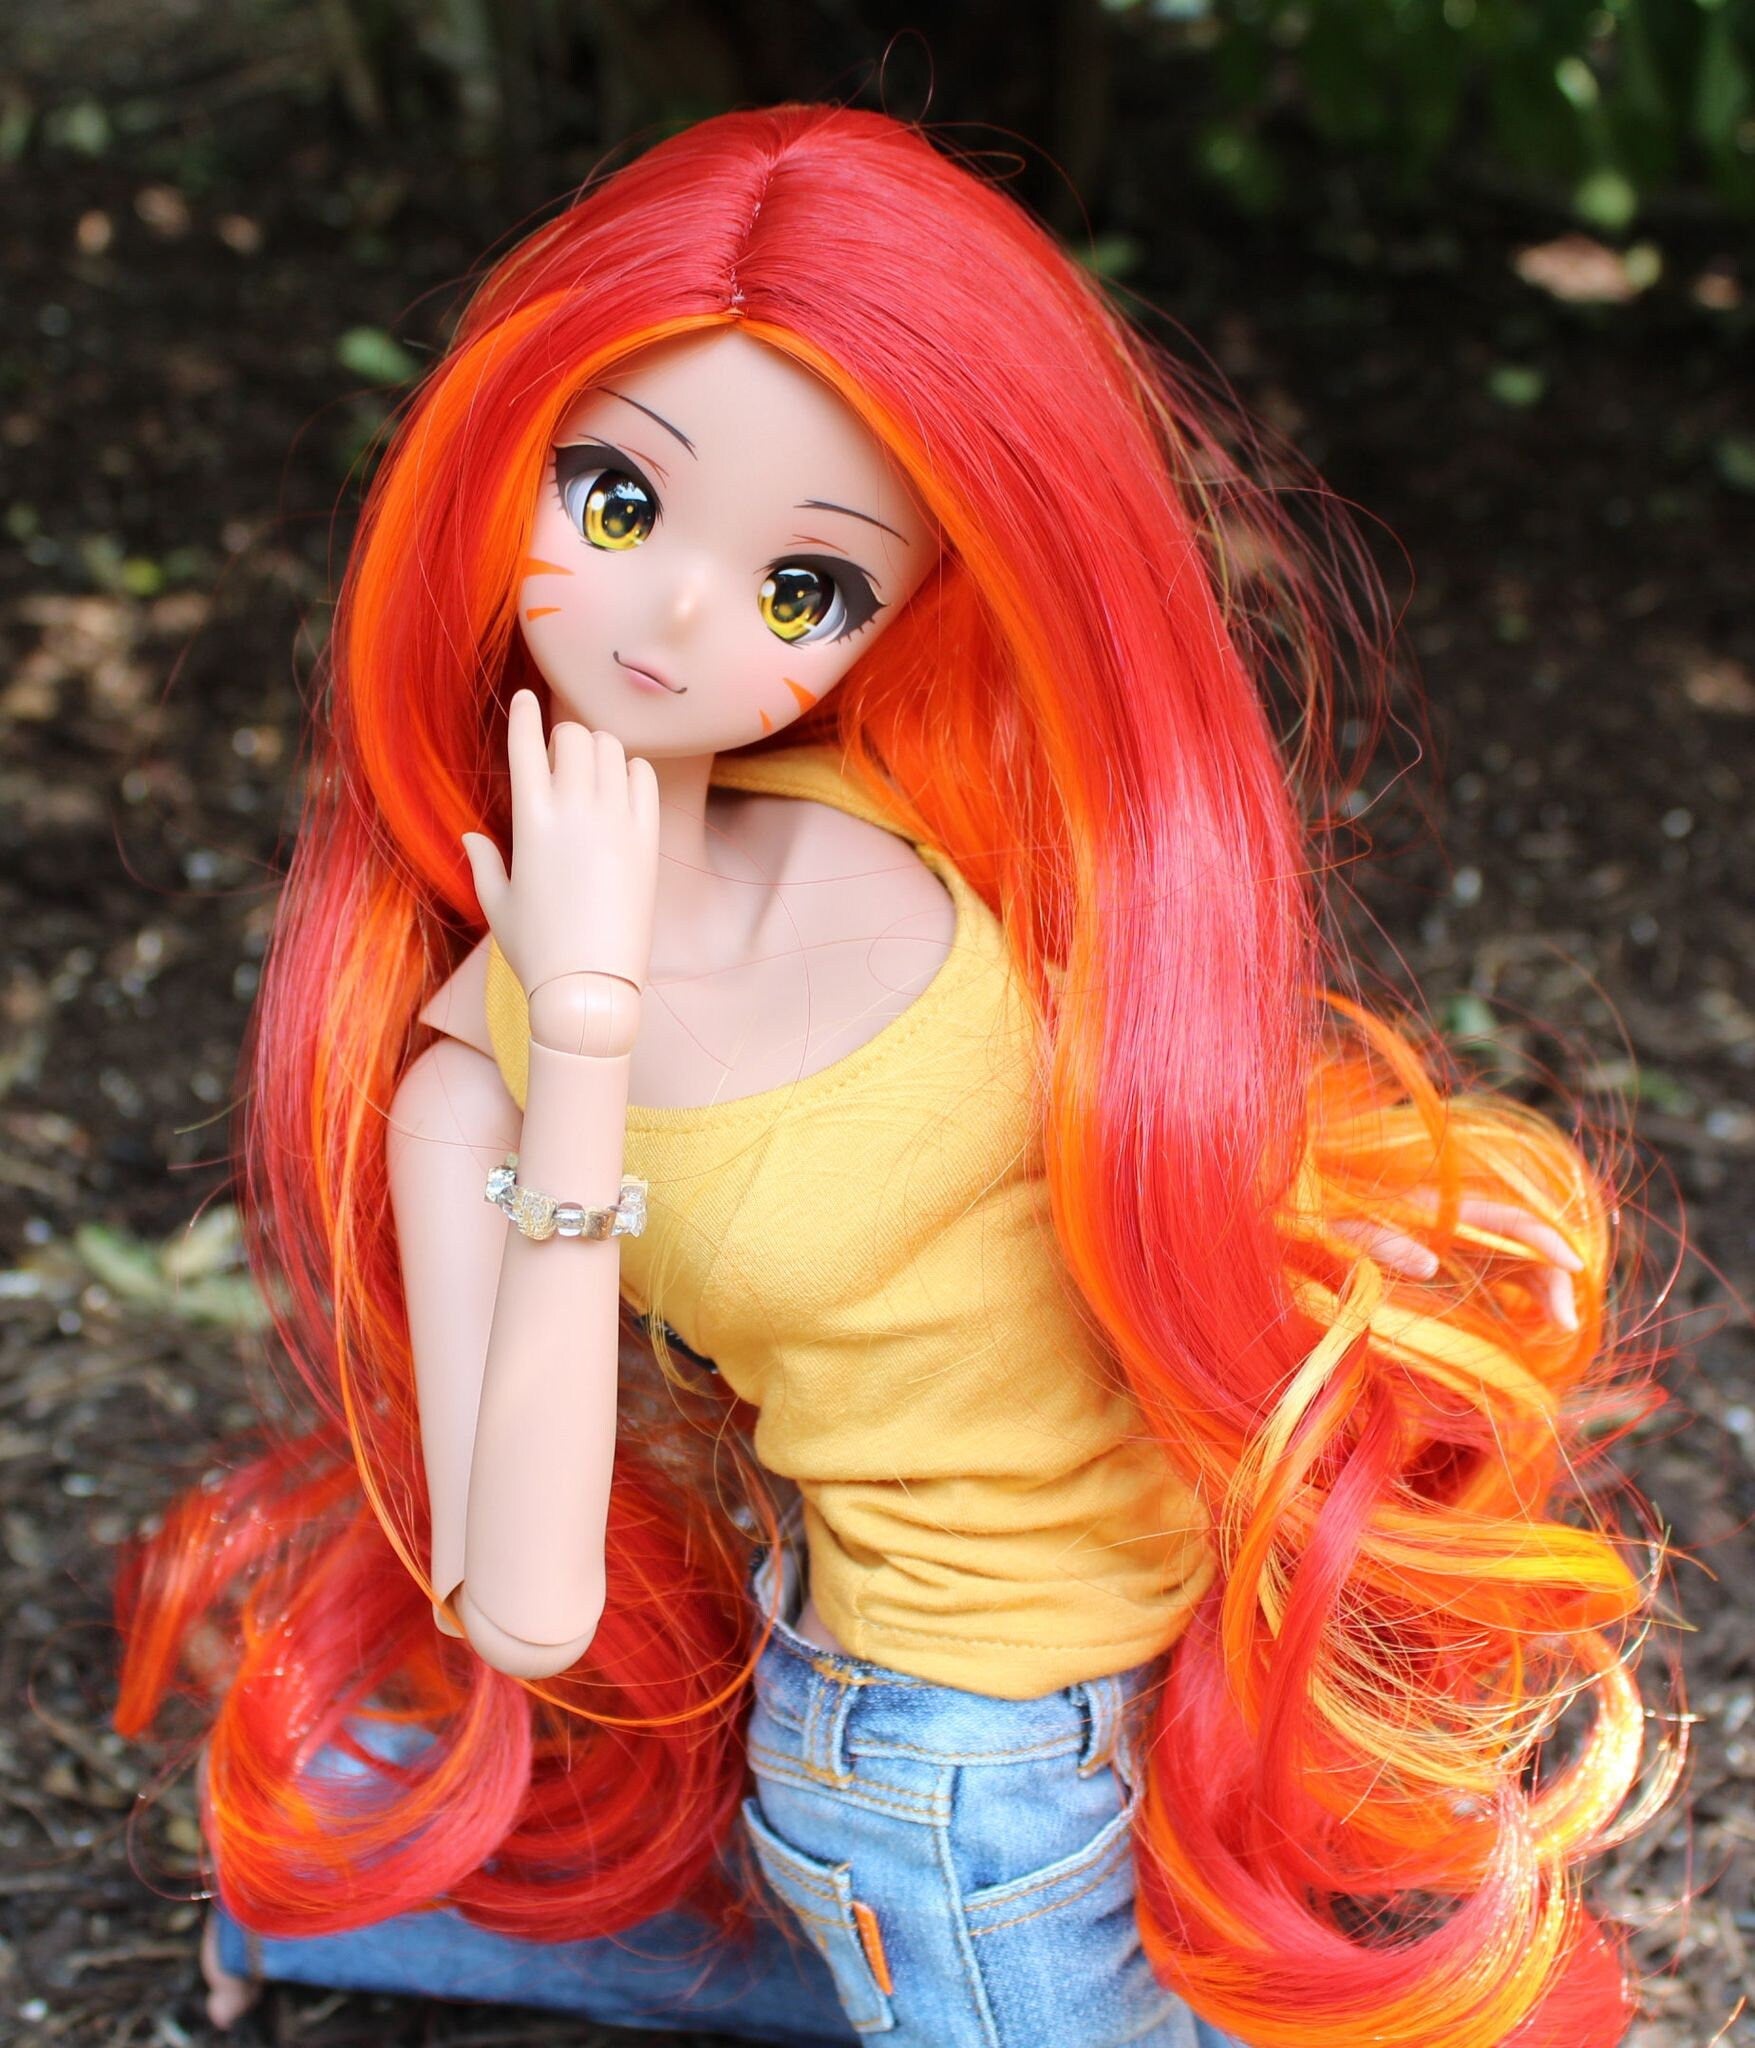 Custom doll Wig for Smart Dolls- Heat Safe - Tangle Resistant- 8.5" head size of Bjd, SD, Dollfie Dream dolls Fire